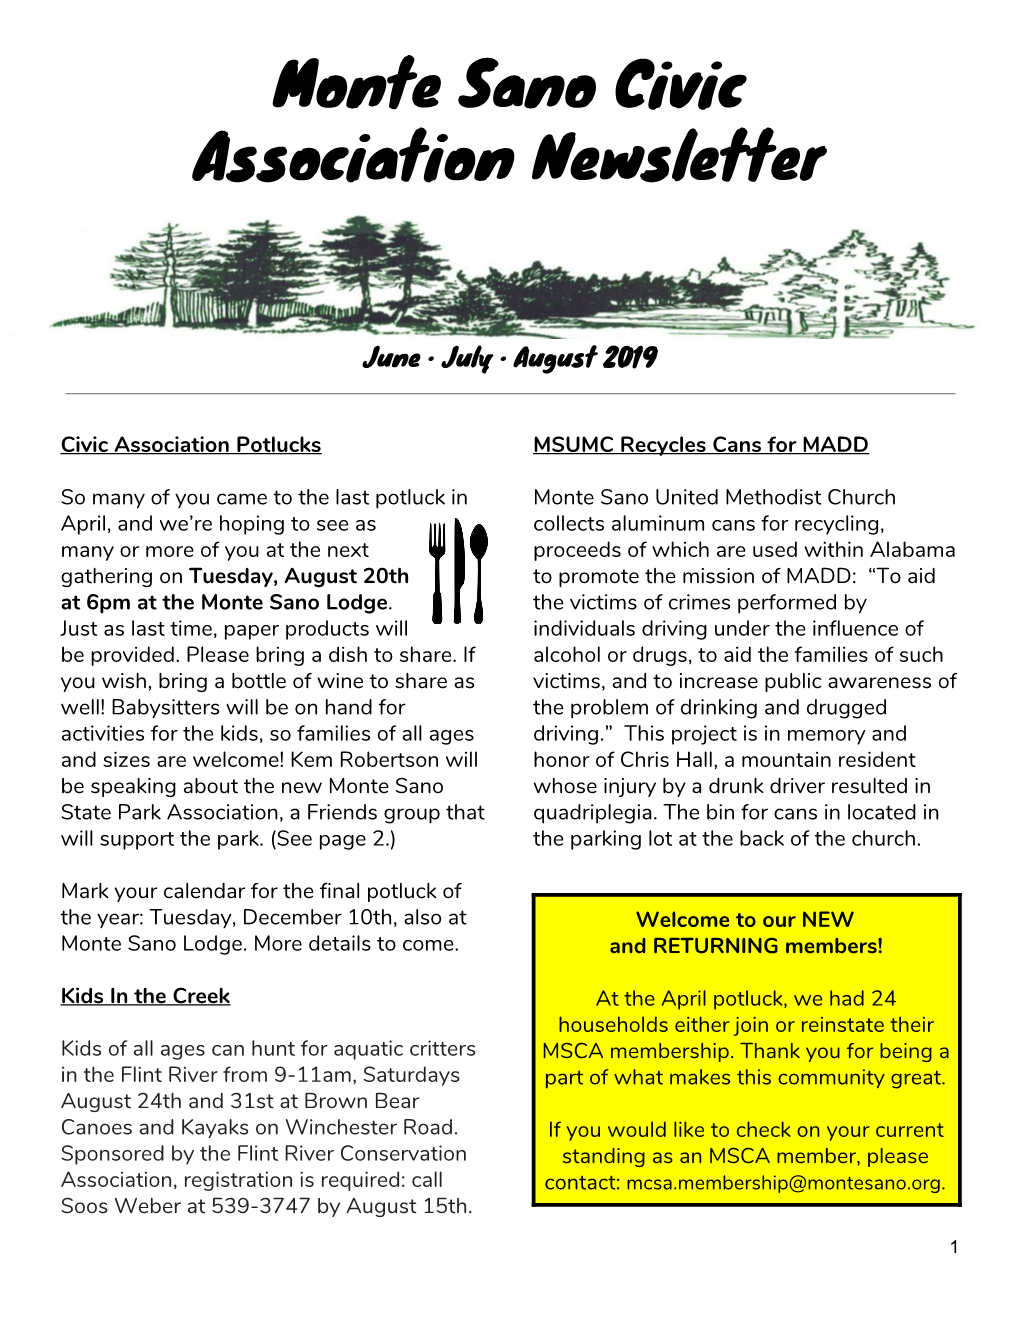 Monte Sano Civic Association Newsletter